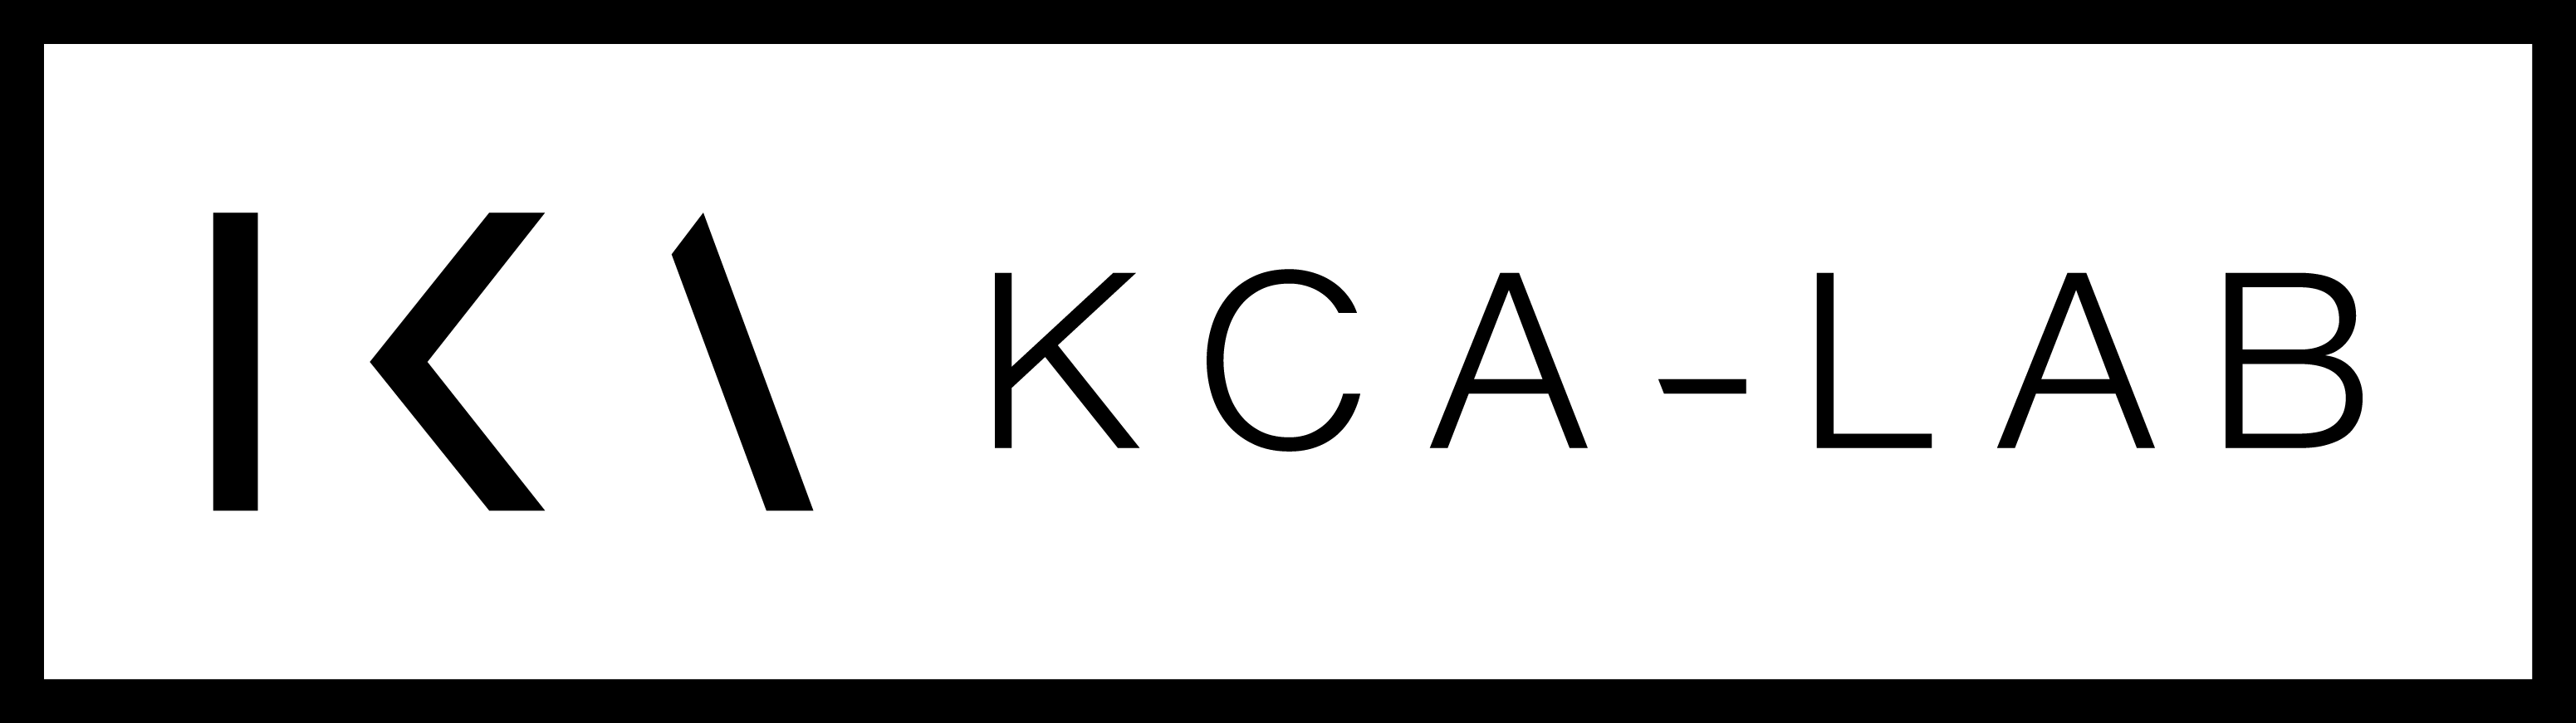 KCA Logo - Athleisure wear